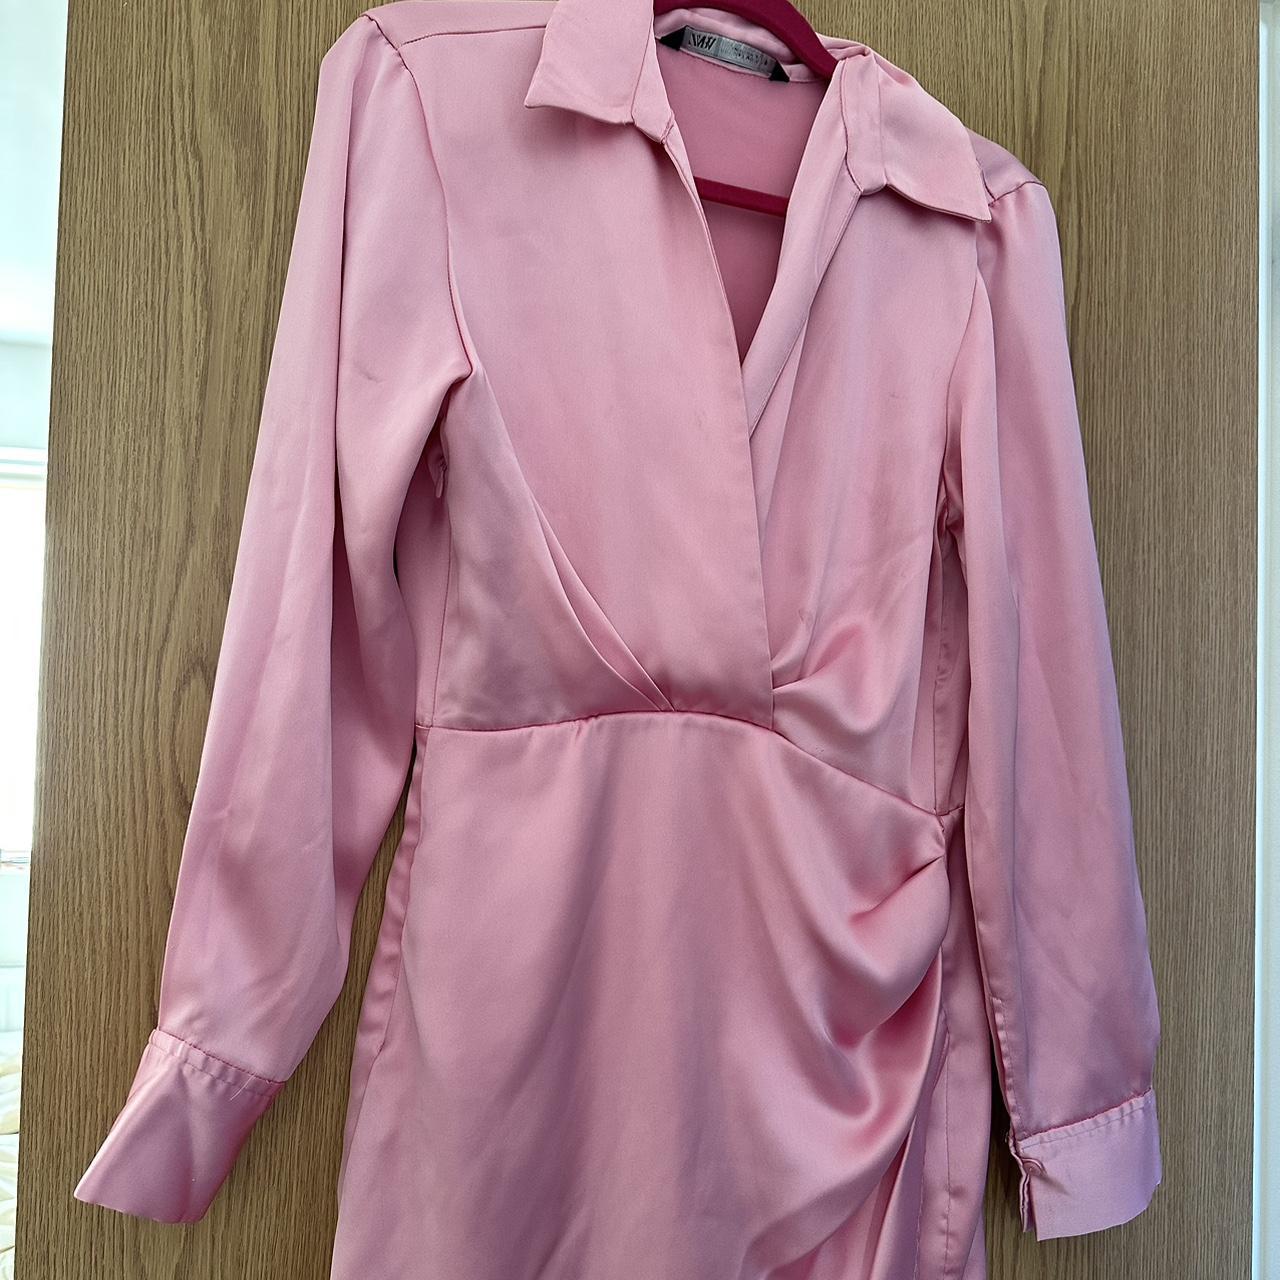 Zara pink satin dress size small worn once - Depop